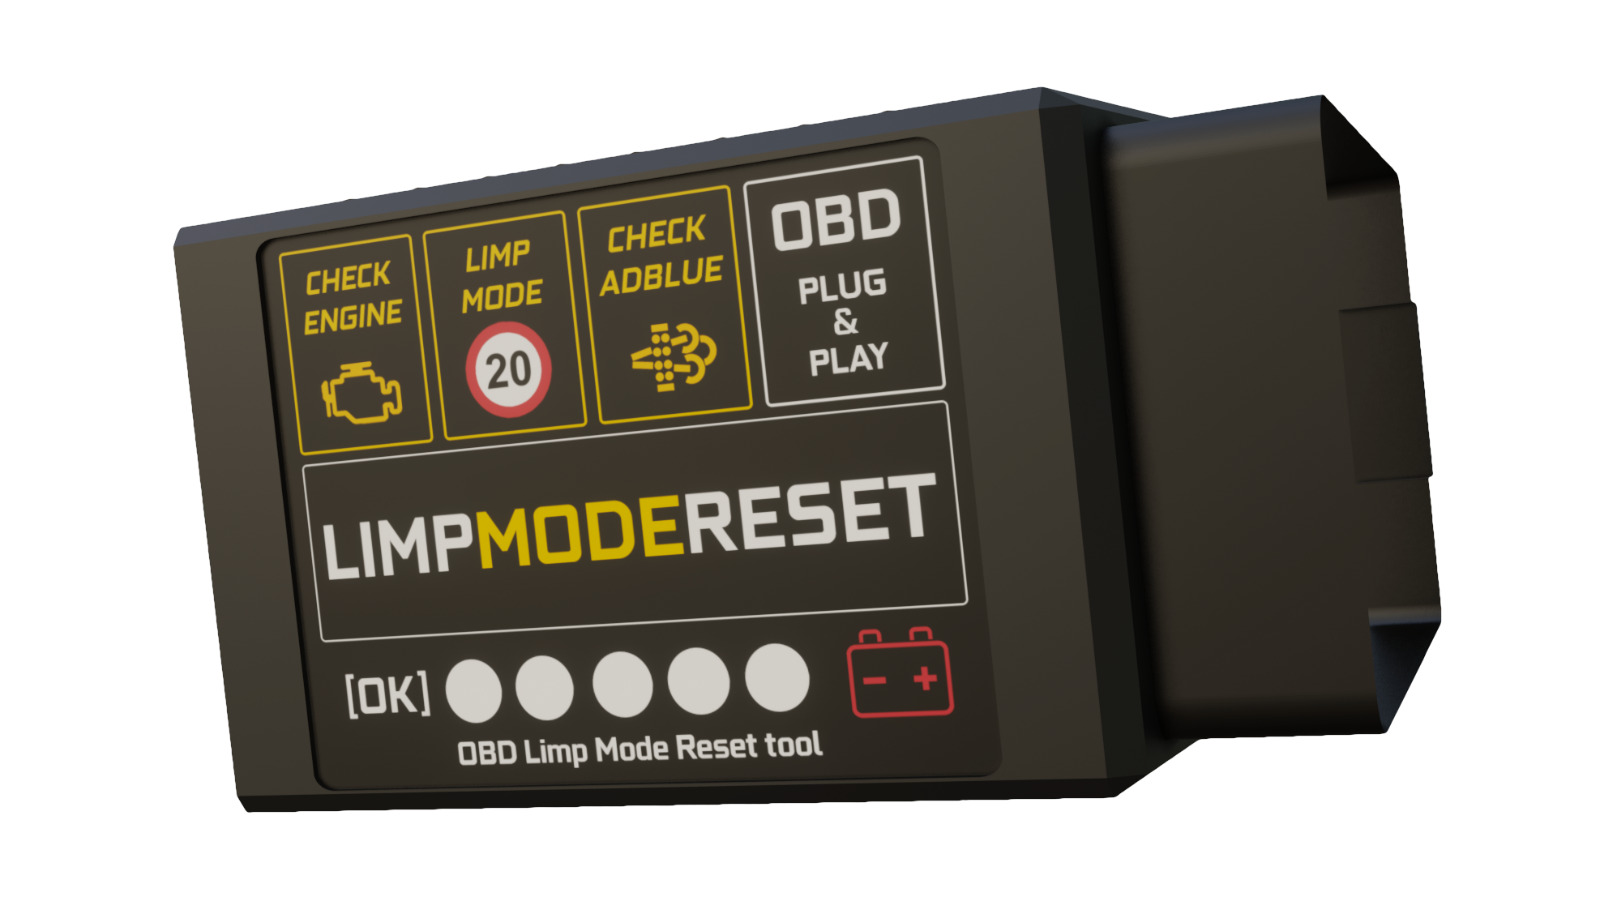 Diagnostic Limp Mode reset tool for Scania Euro 6 trucks, plug & play OBD tool